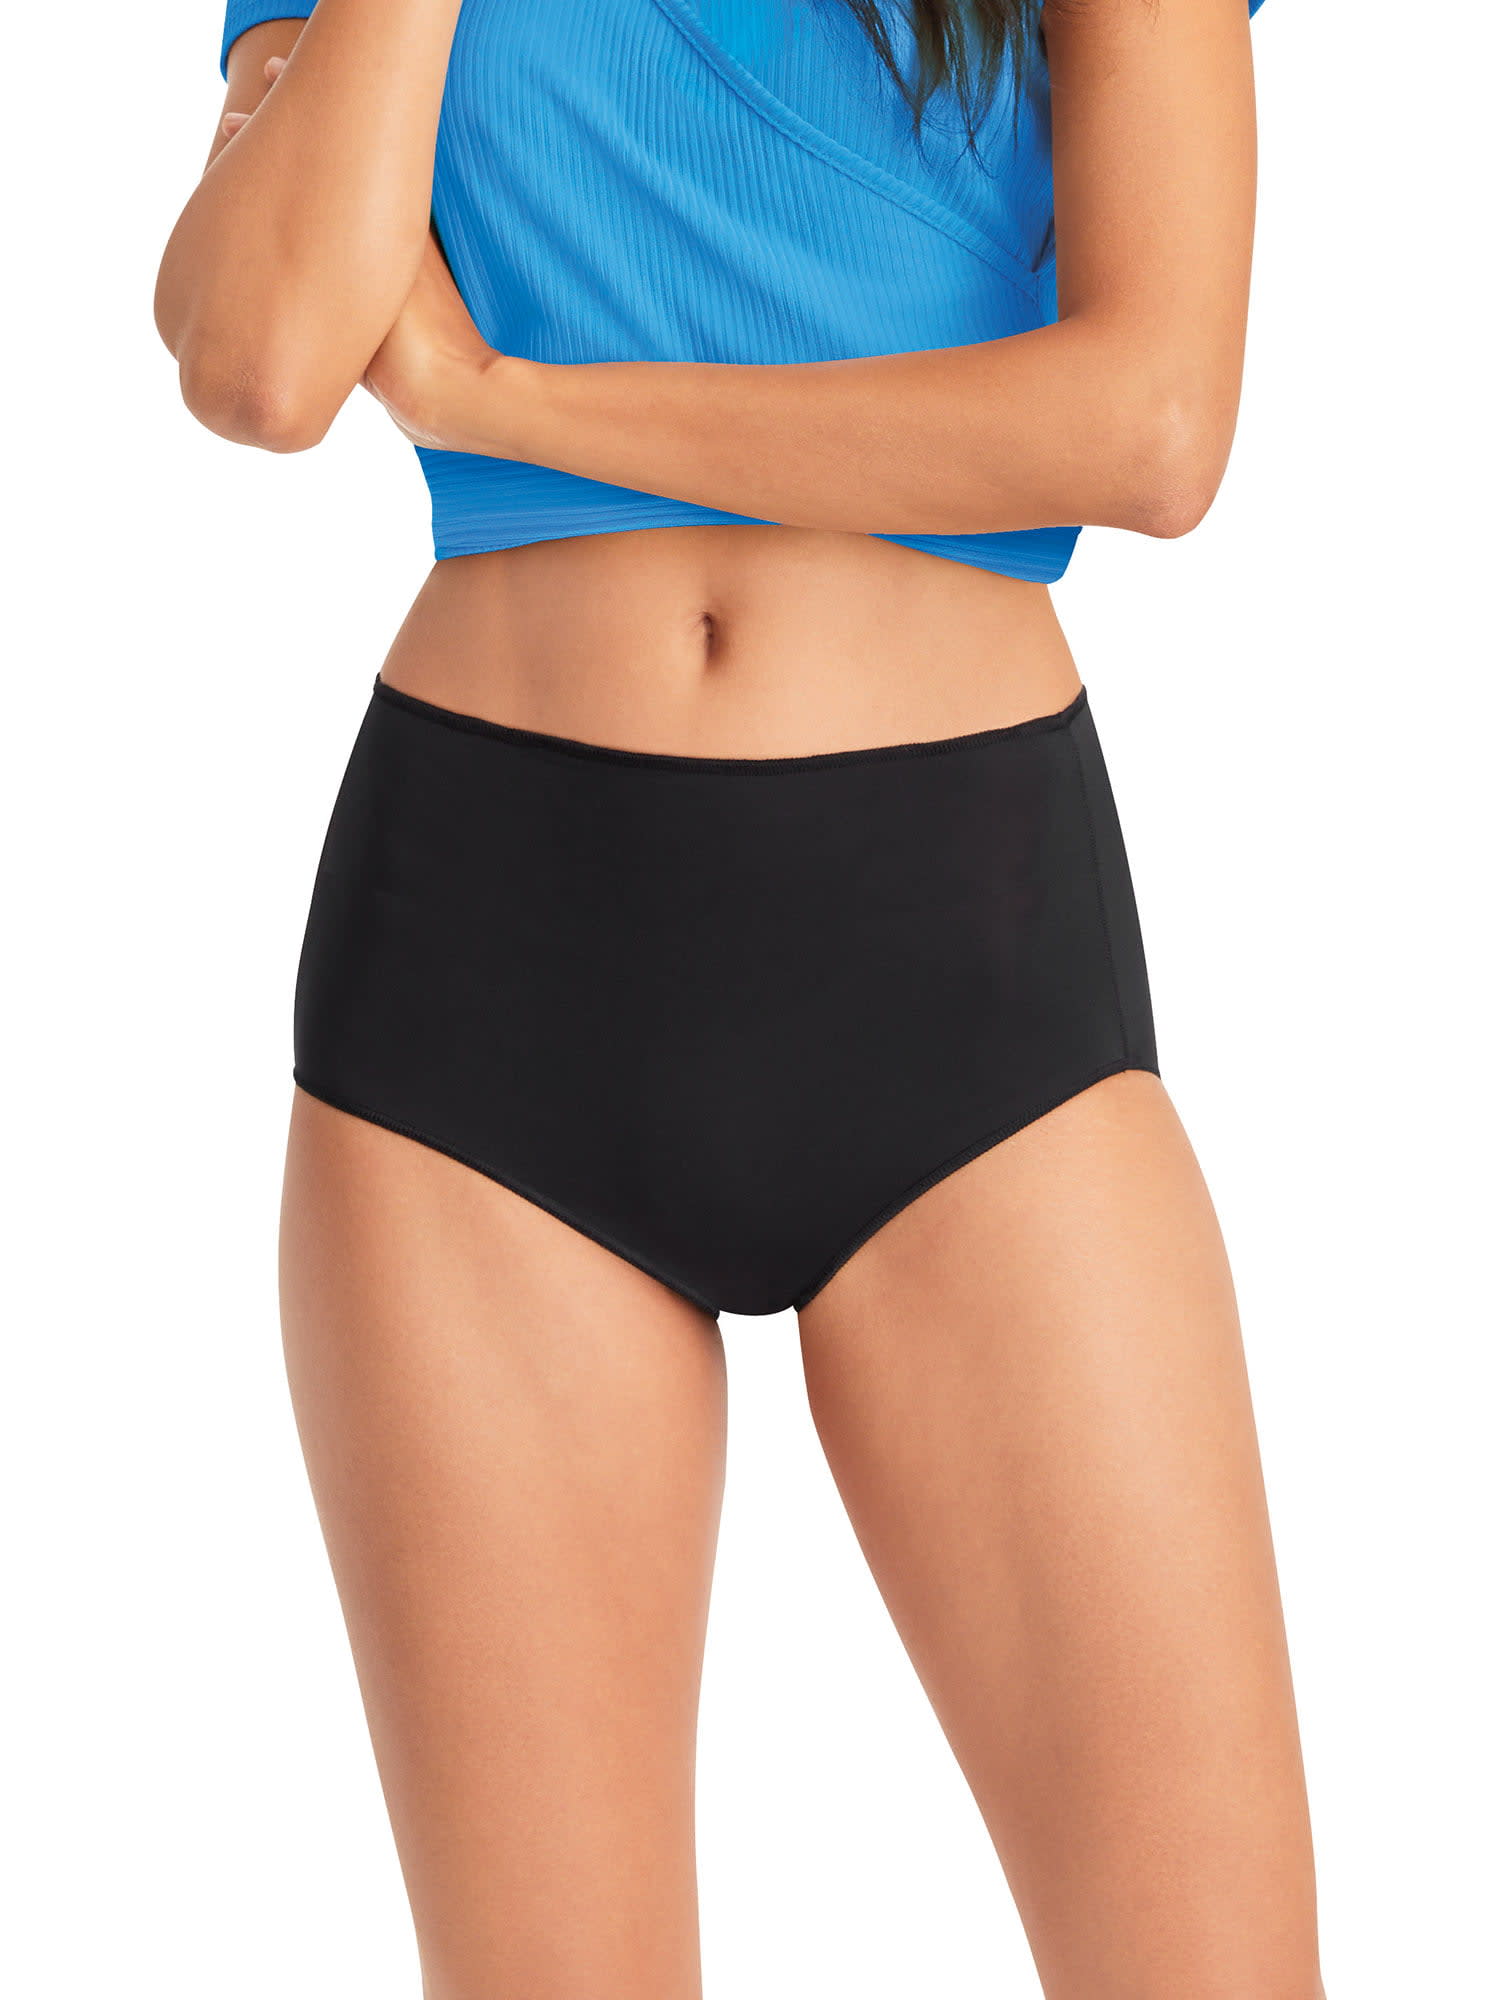 Hanes Women's Cool Comfort Microfiber Brief Underwear, 10-Pack - DroneUp  Delivery